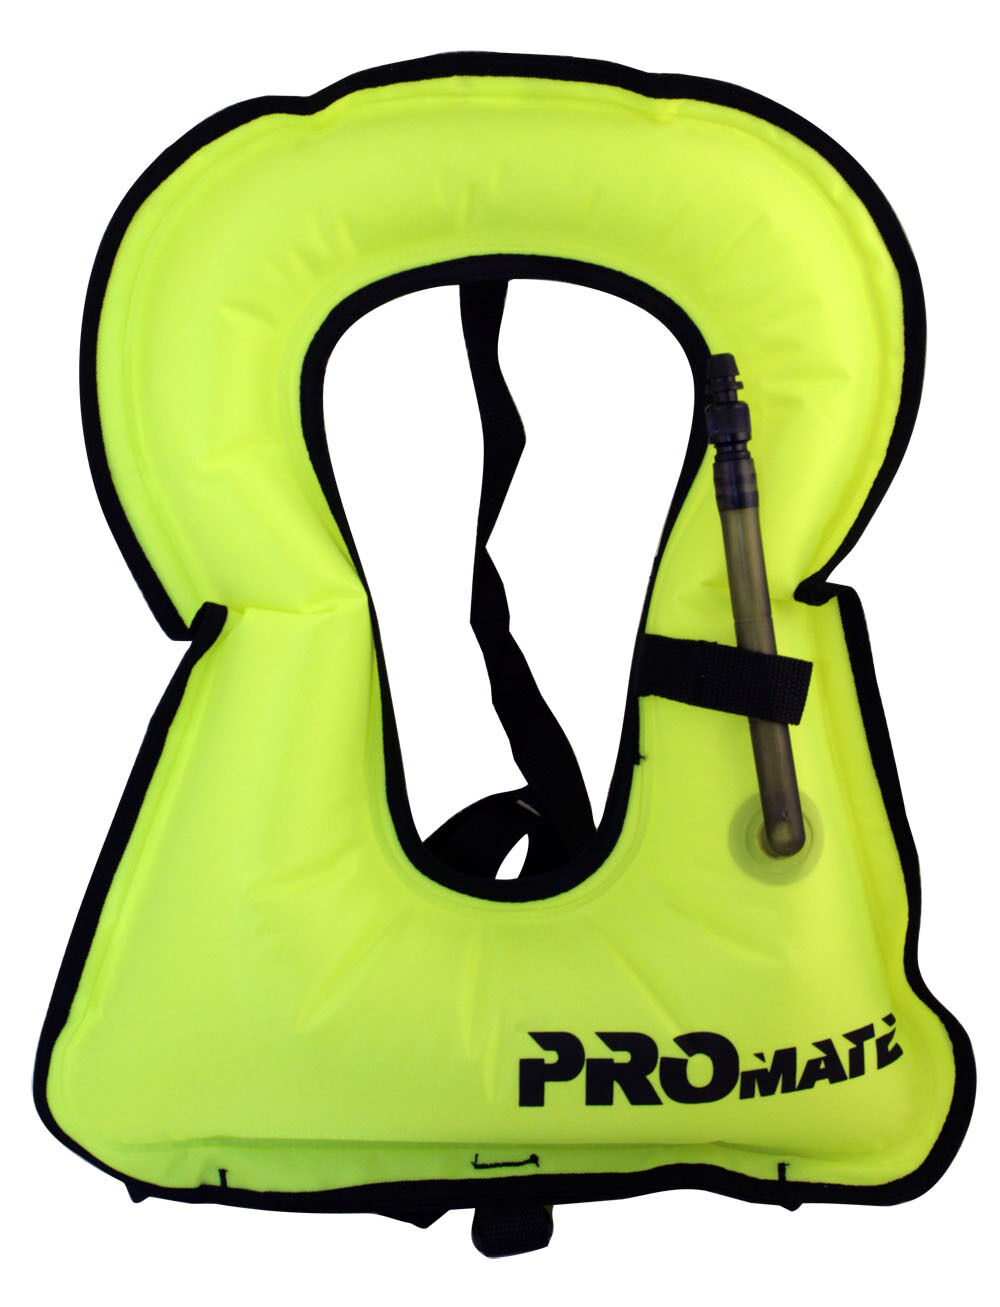 Promate Snorkel Vest Adult Large 150-240 Lb Yellow Snorkeling Life Safety Jacket